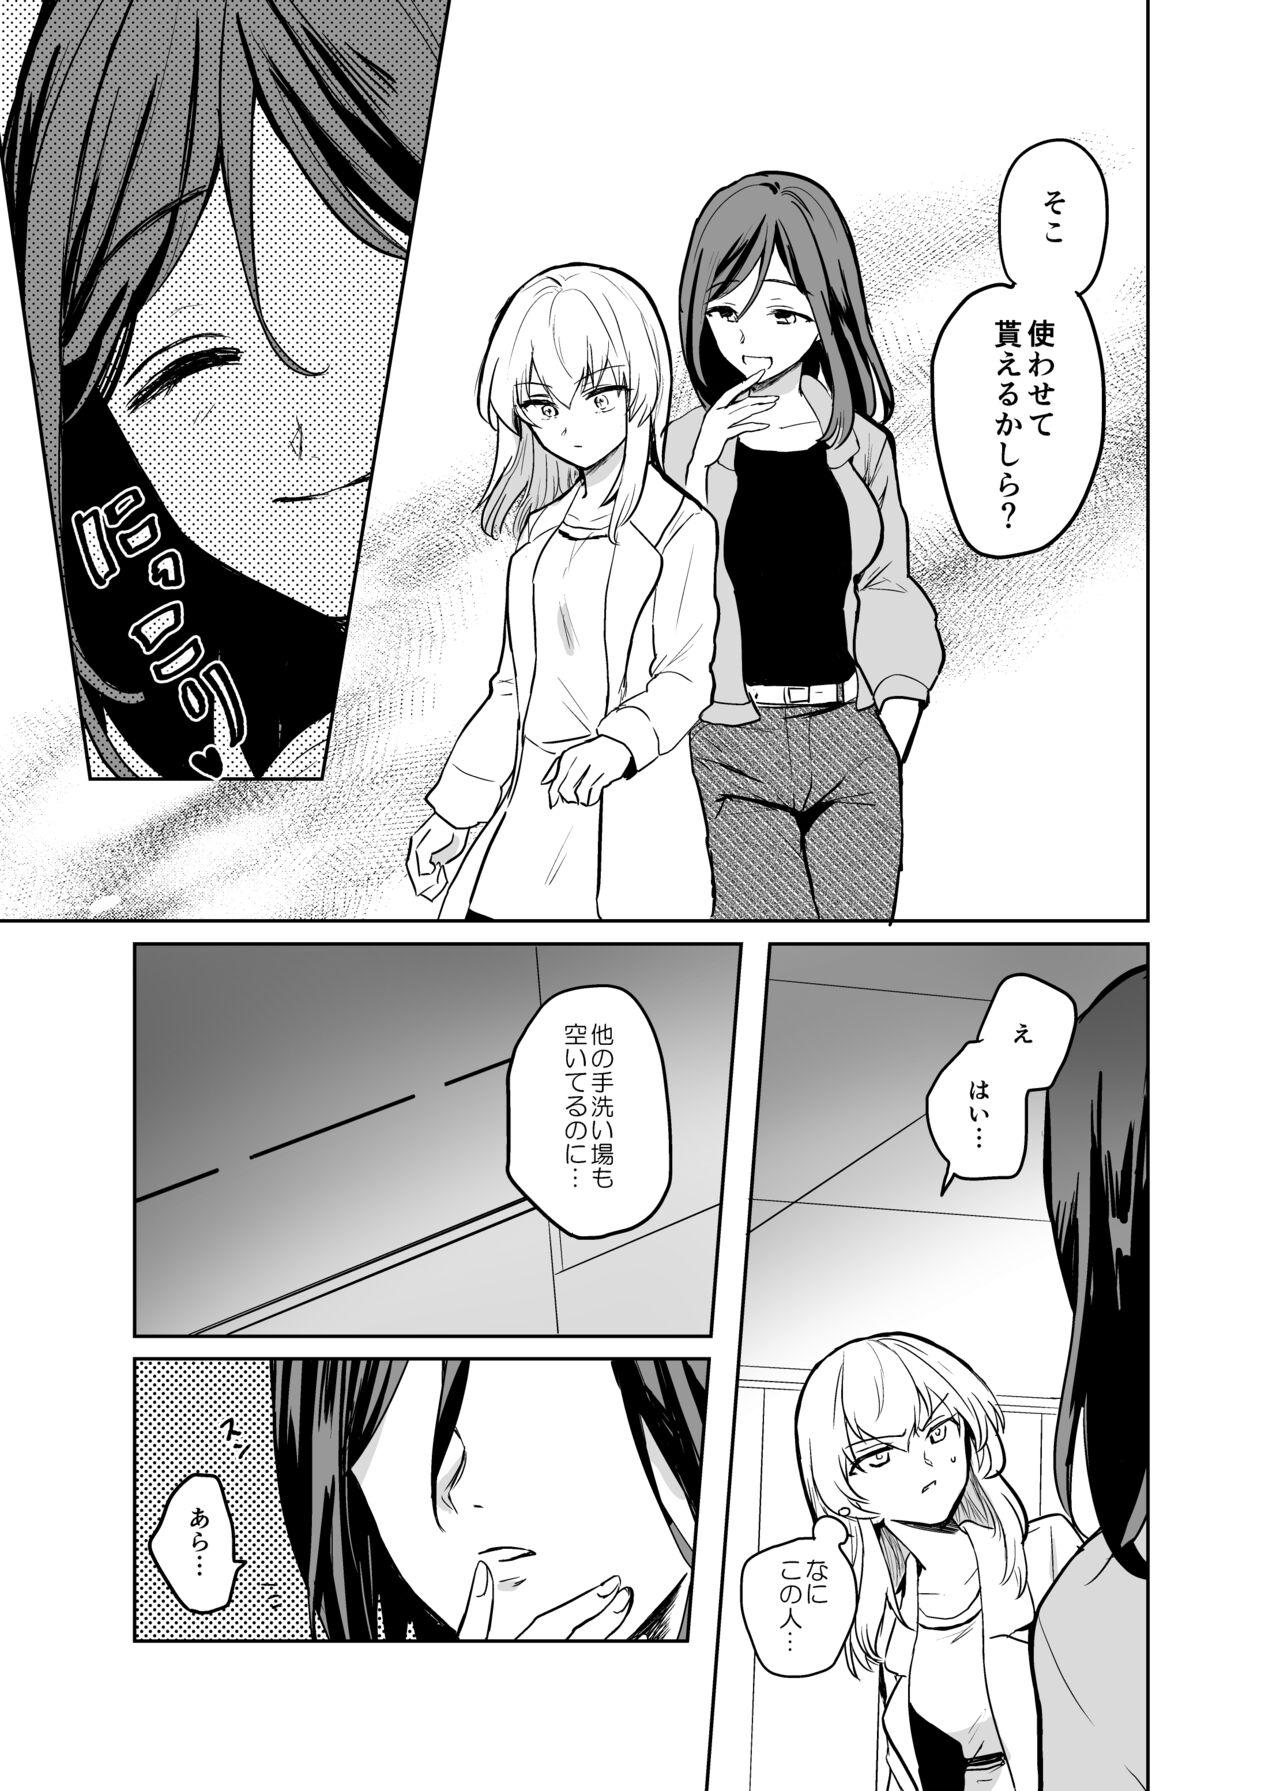 Tease Kitsune ni Yomeiri? 2 - Girls und panzer Roundass - Page 10